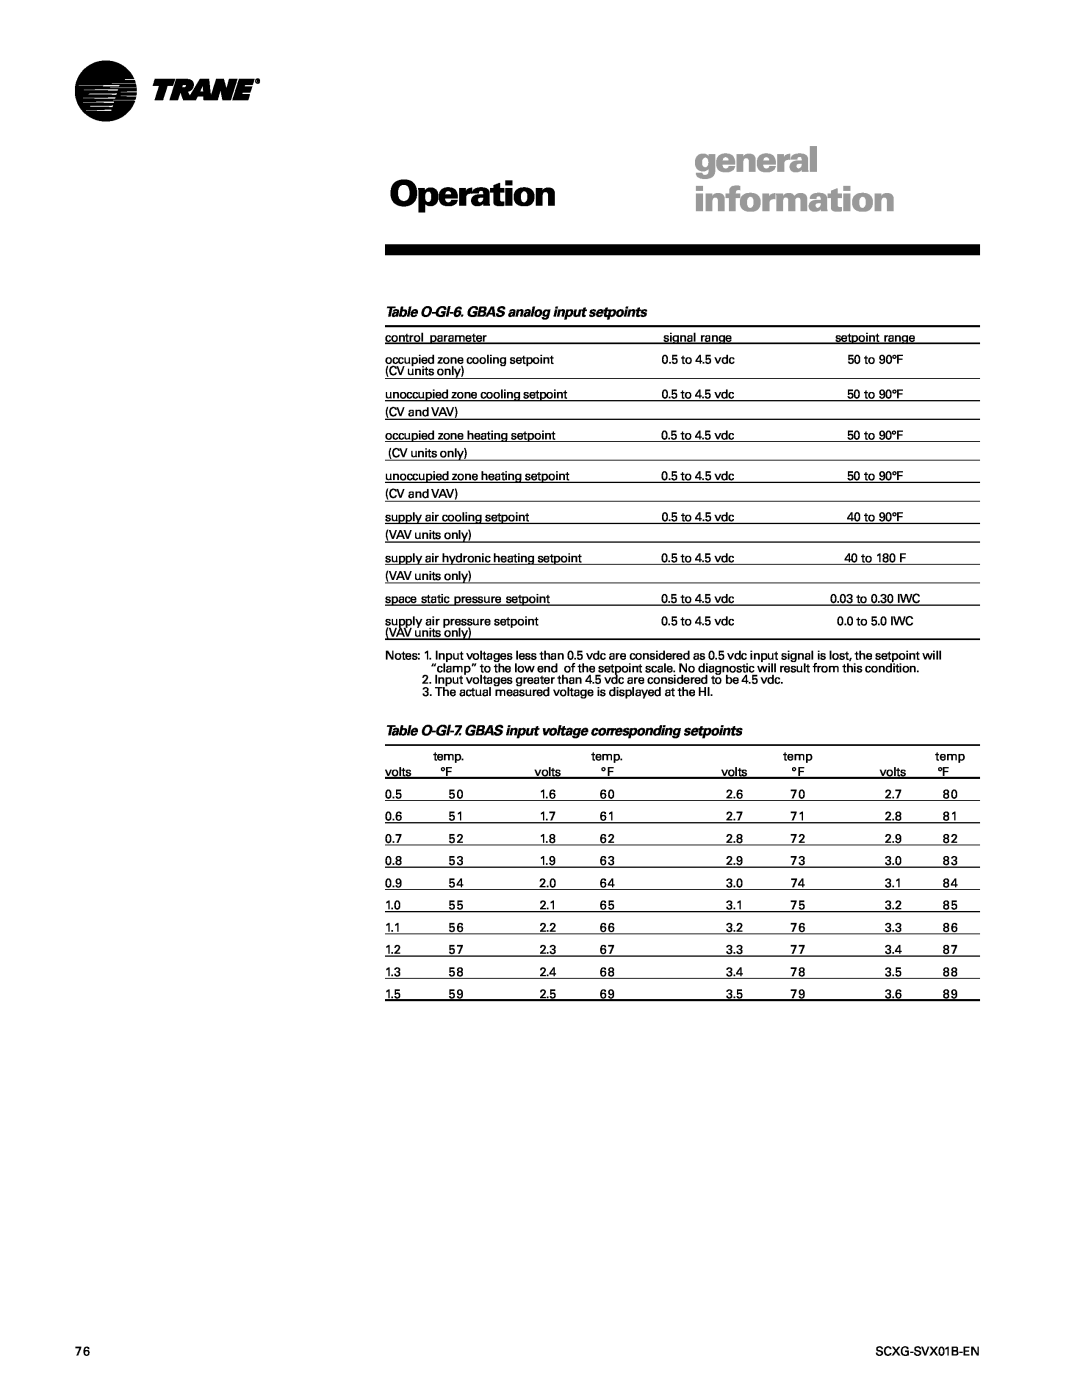 Trane SCXG-SVX01B-EN manual general Operation information, Table O-GI-6.GBAS analog input setpoints 